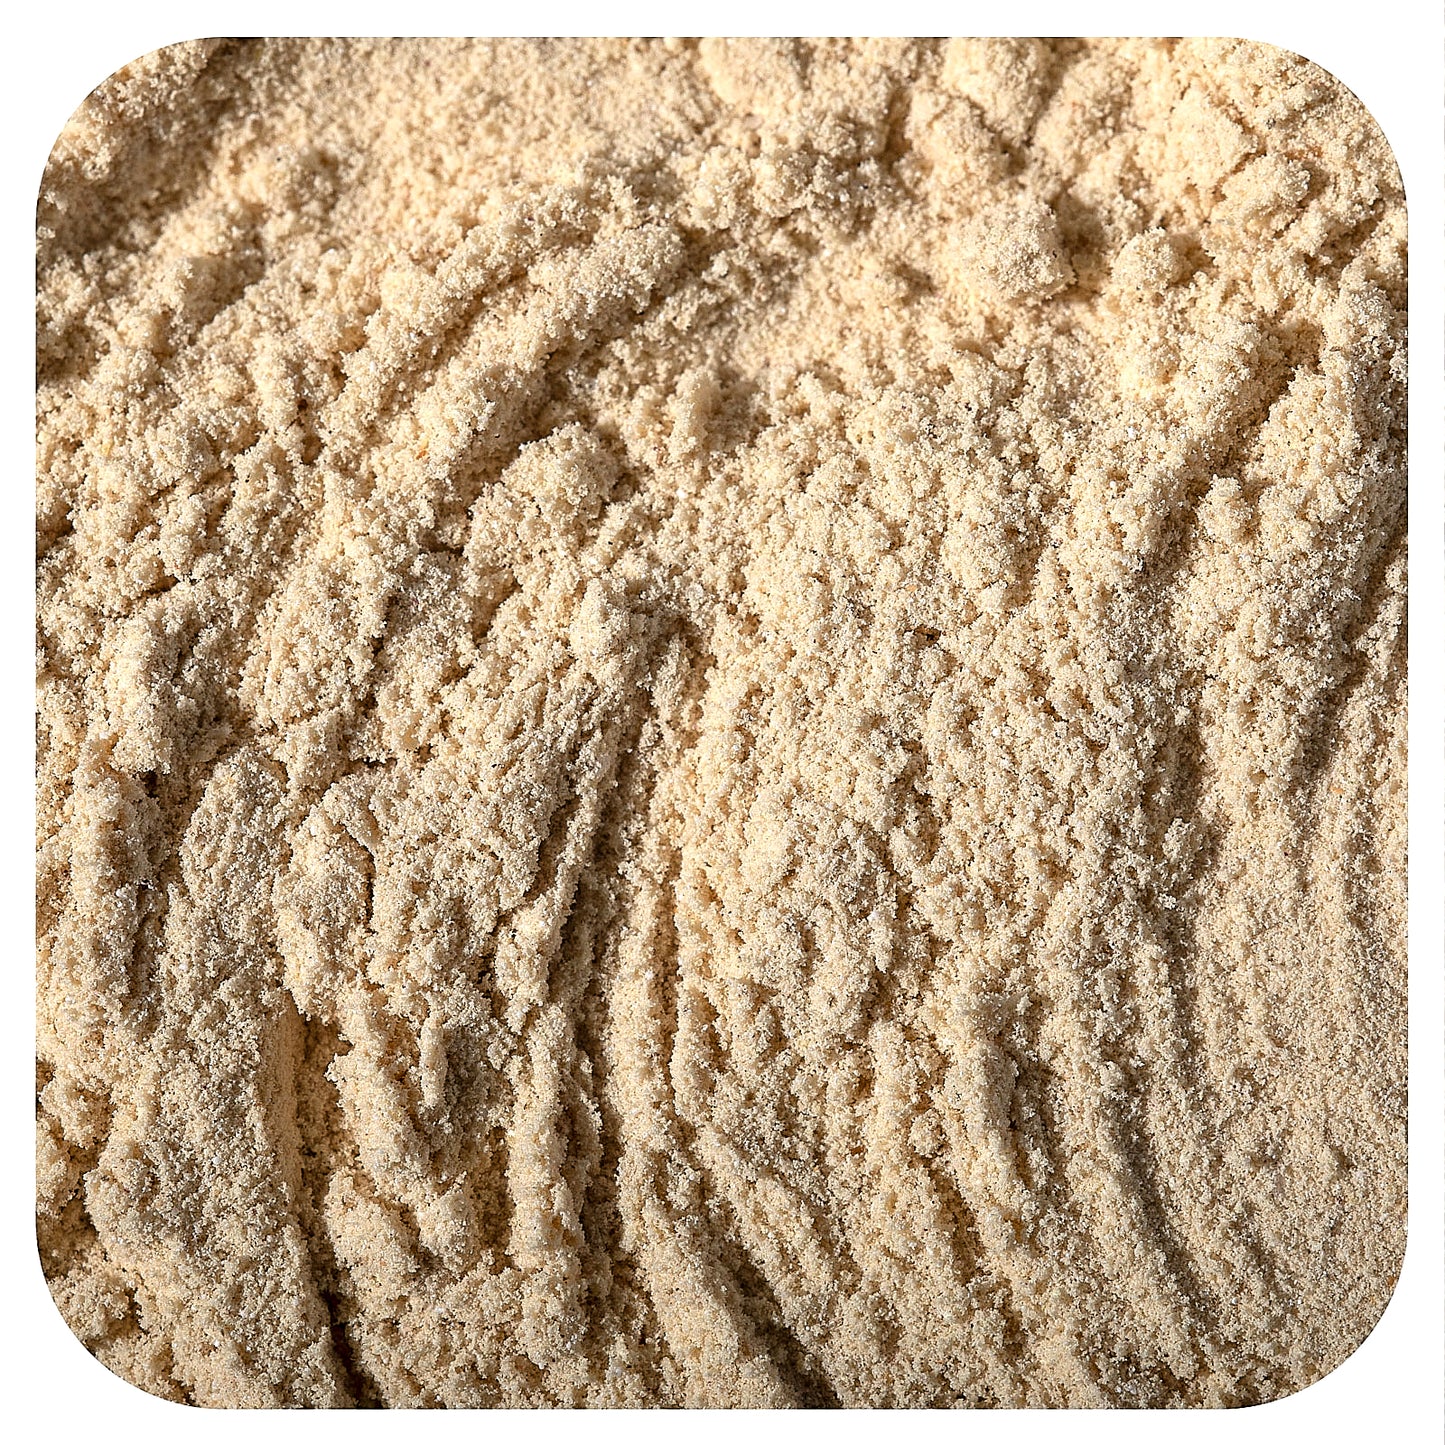 California Gold Nutrition, SUPERFOODS - Organic Maca Root Powder, 8.5 oz (240 g)